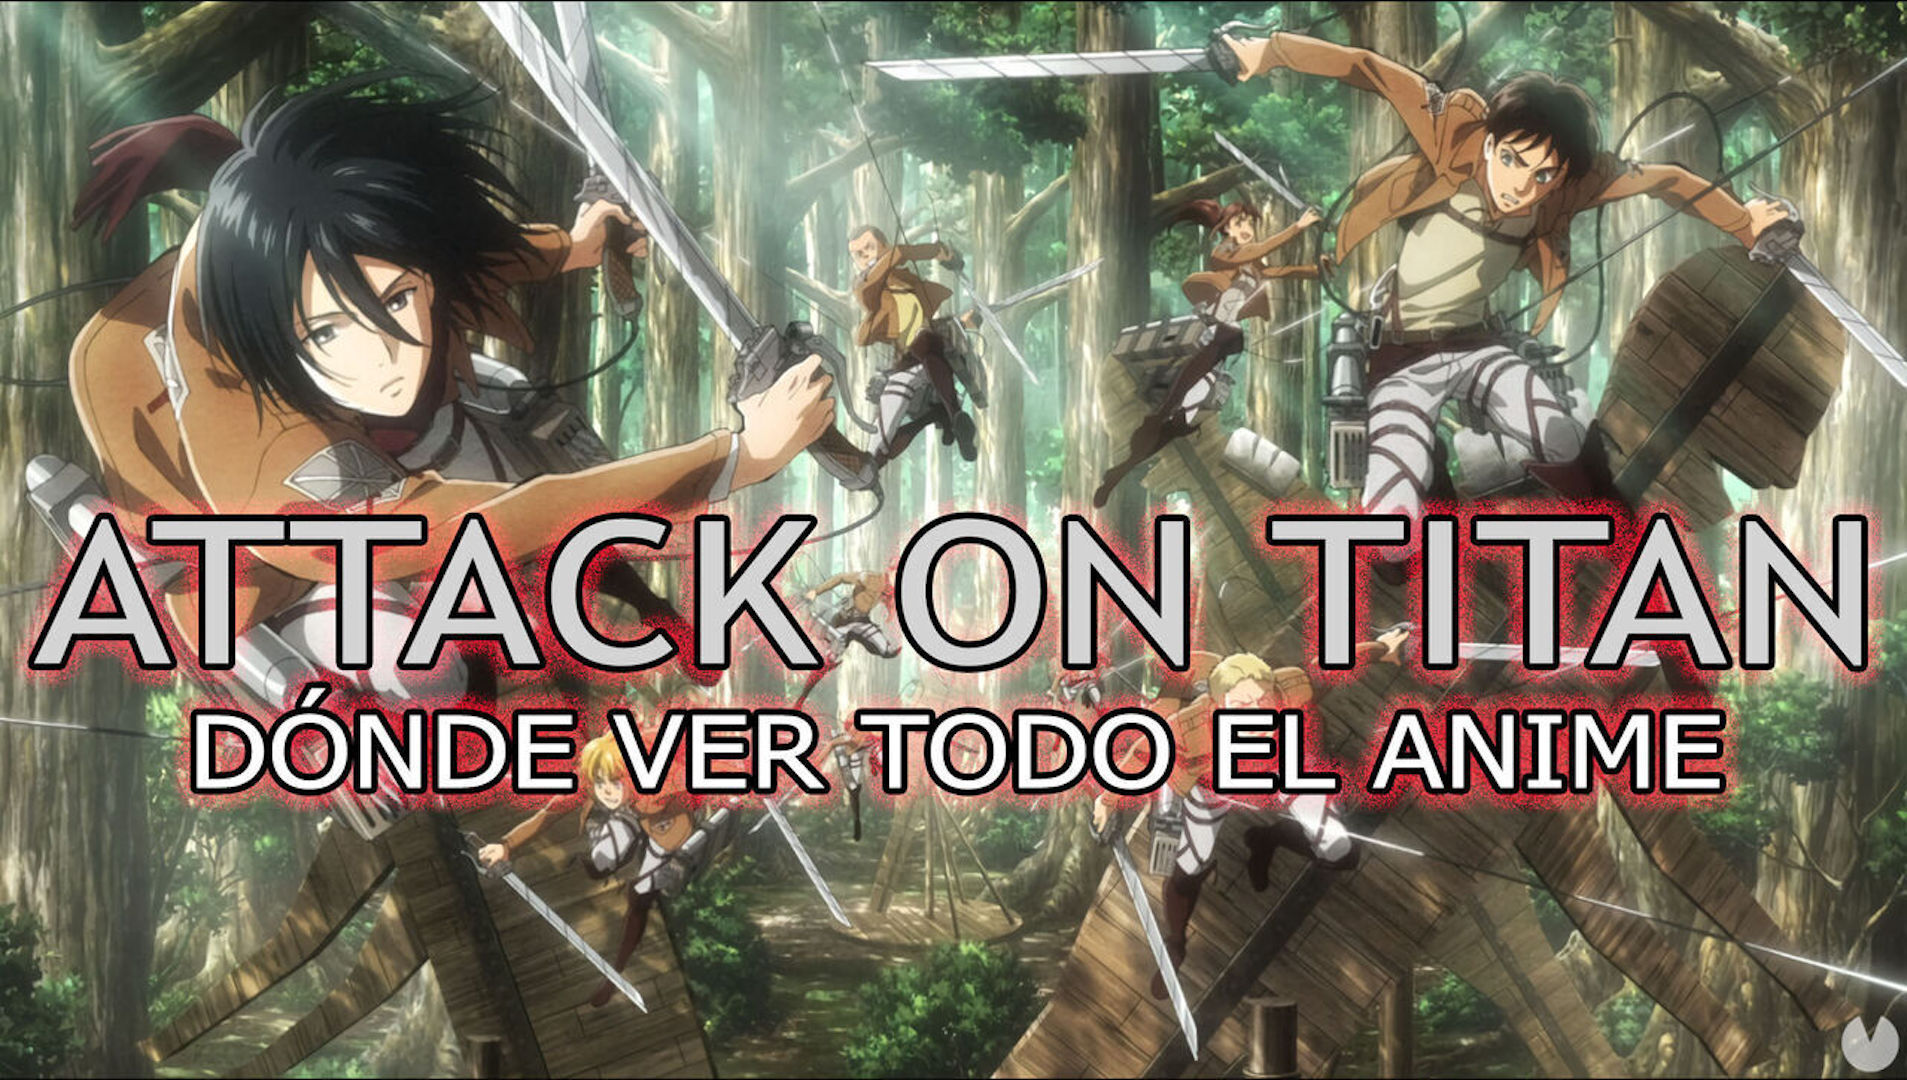 ONDE ASSISTIR! Shingeki No Kyojin Quarta Temporada Parte 2 - Attack on  Titan Season 4 Part 2 